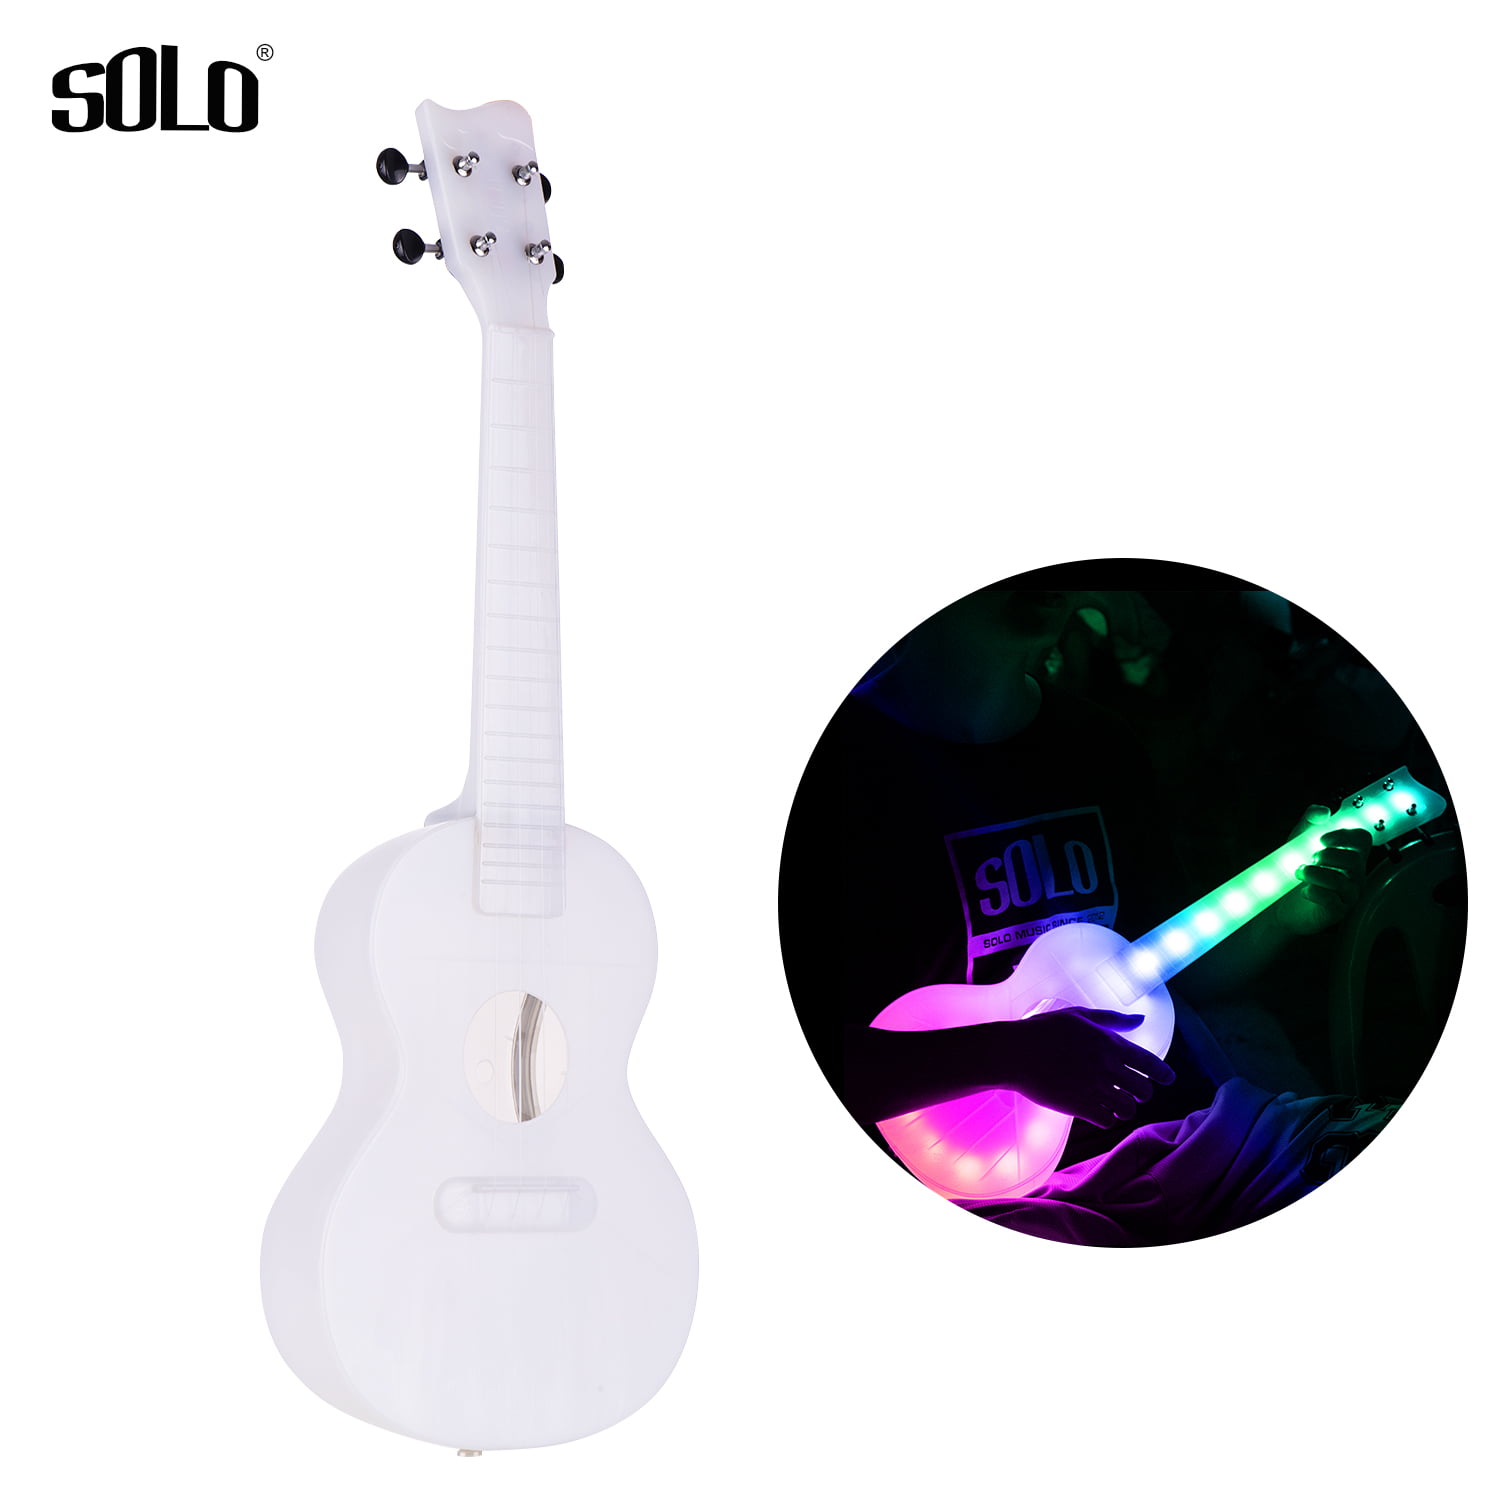 SOLO SU-30 23 Inch Concert Ukulele Colorful LED Lighting Smart Ukelele Uke  Carbon Strings with Gig Bag USB Charging Cable